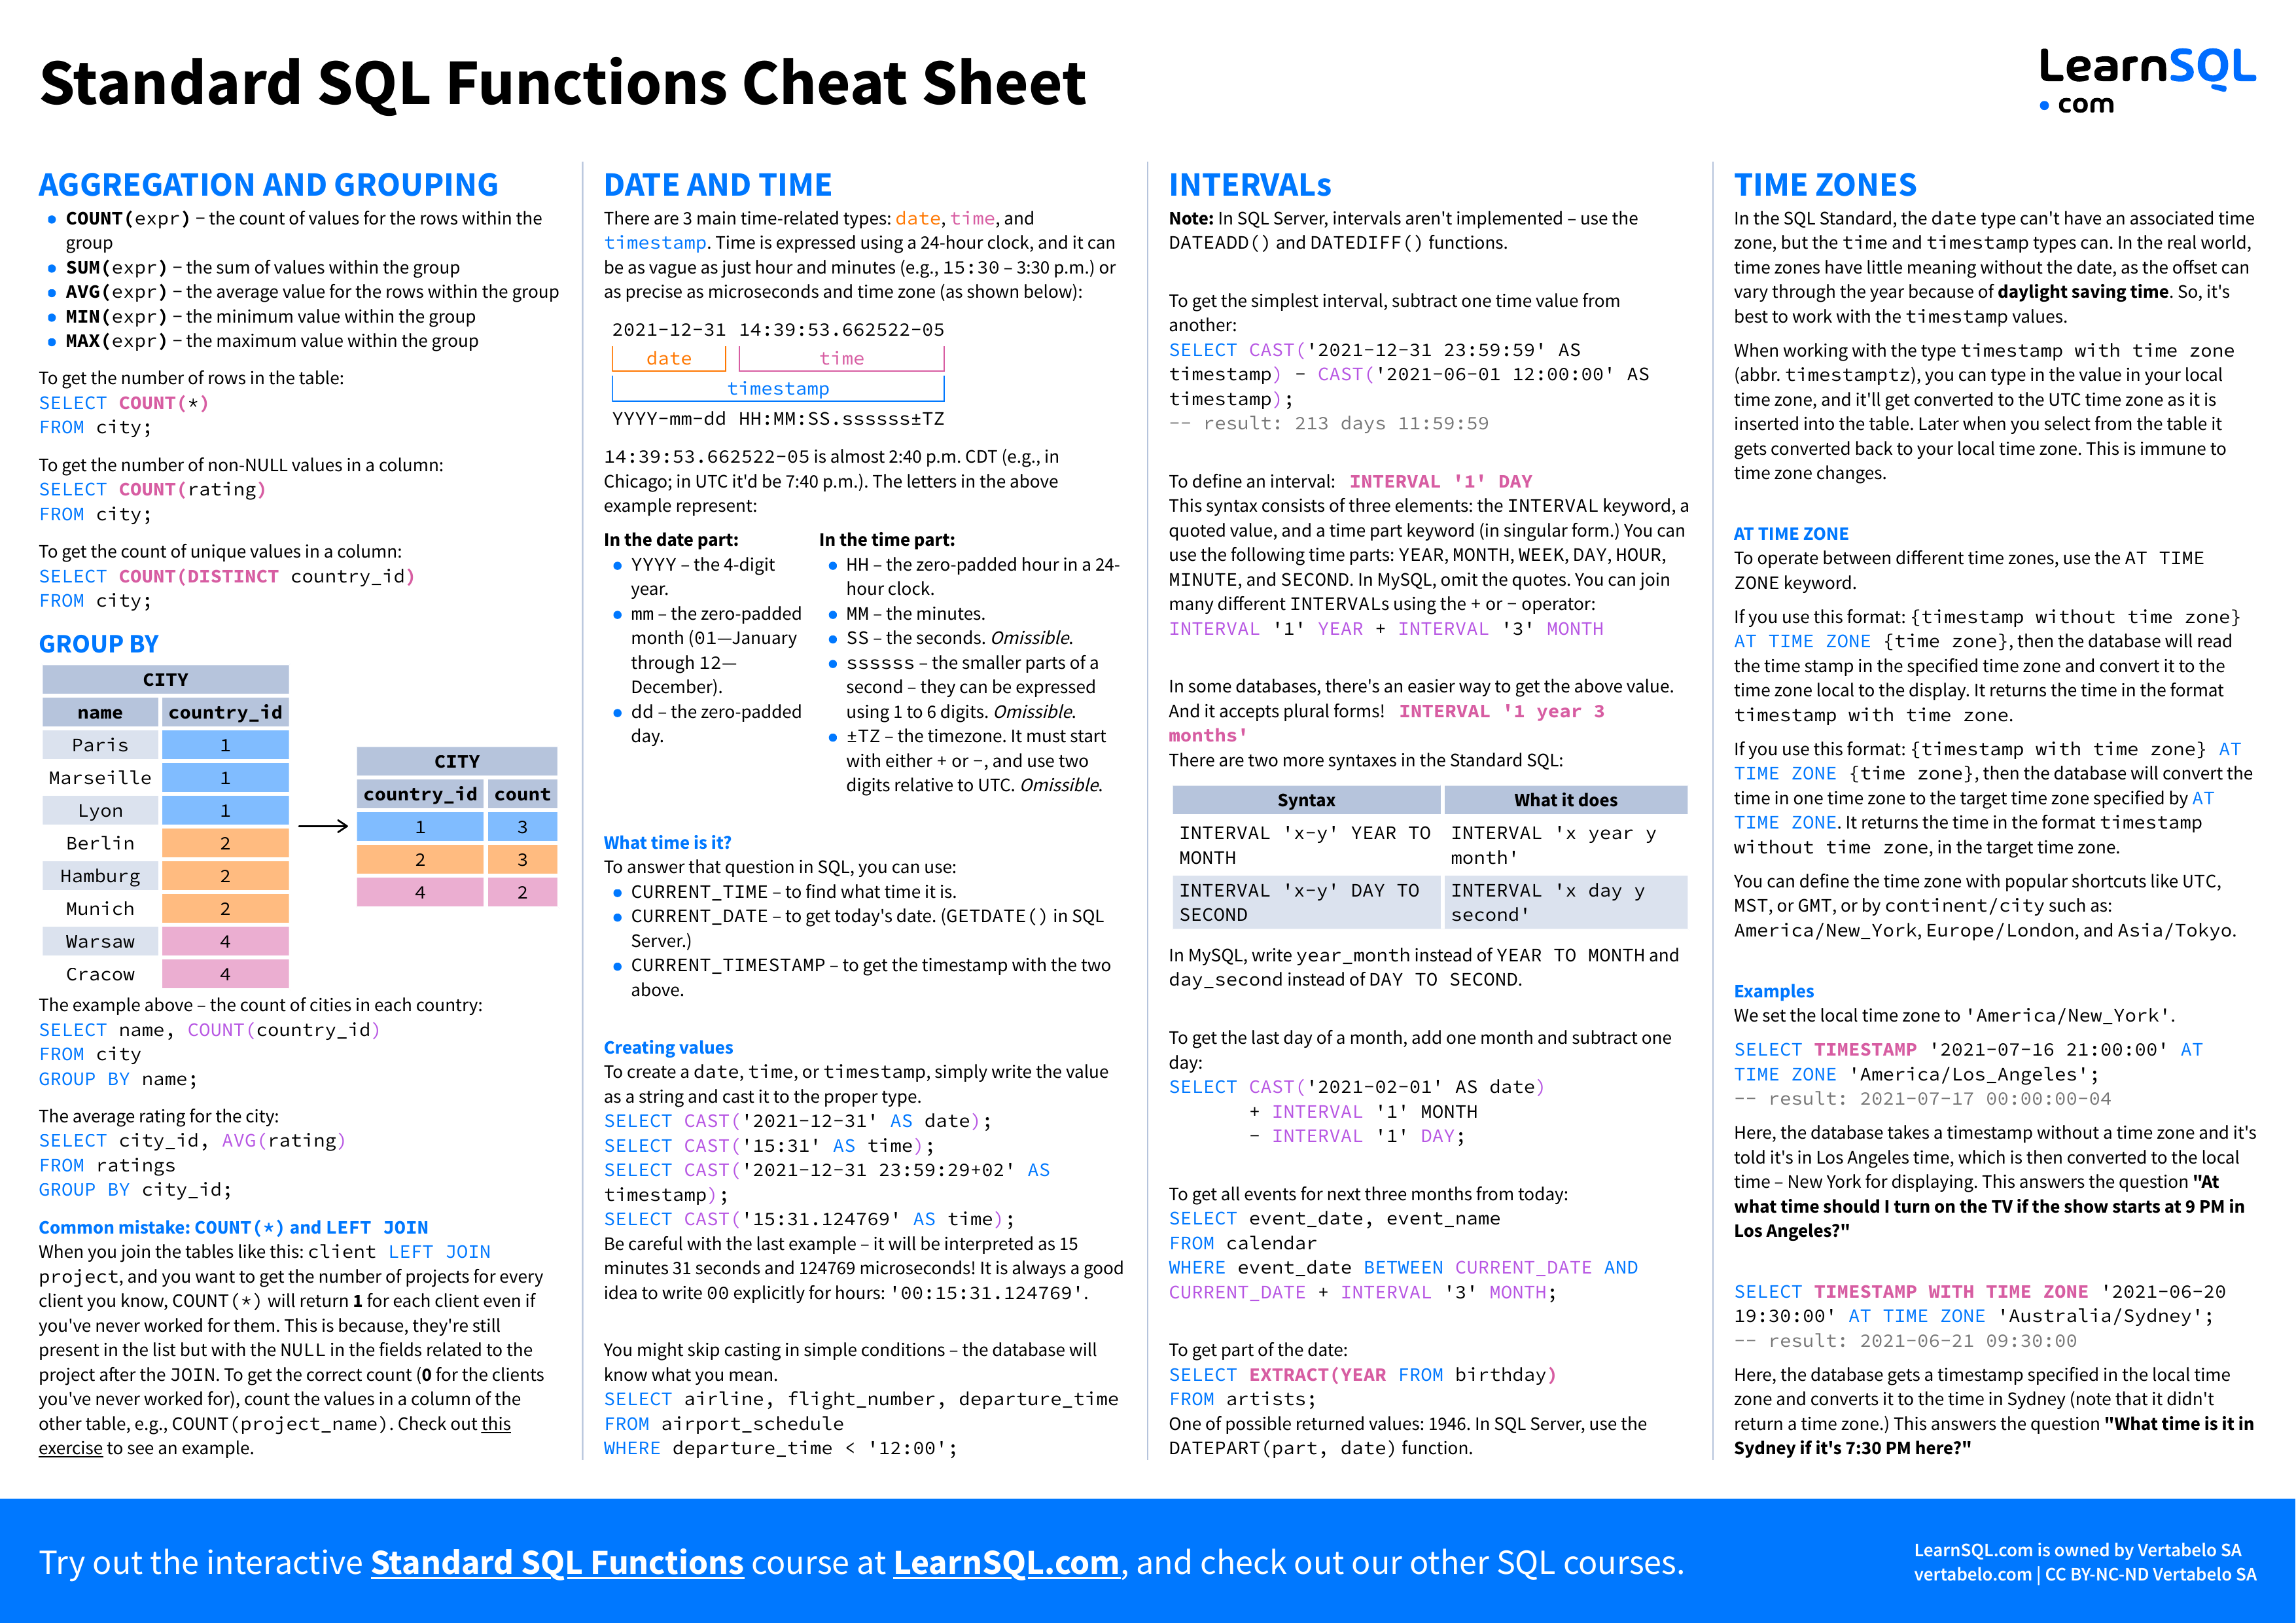 standard-sql-functions-cheat-sheet-learnsql